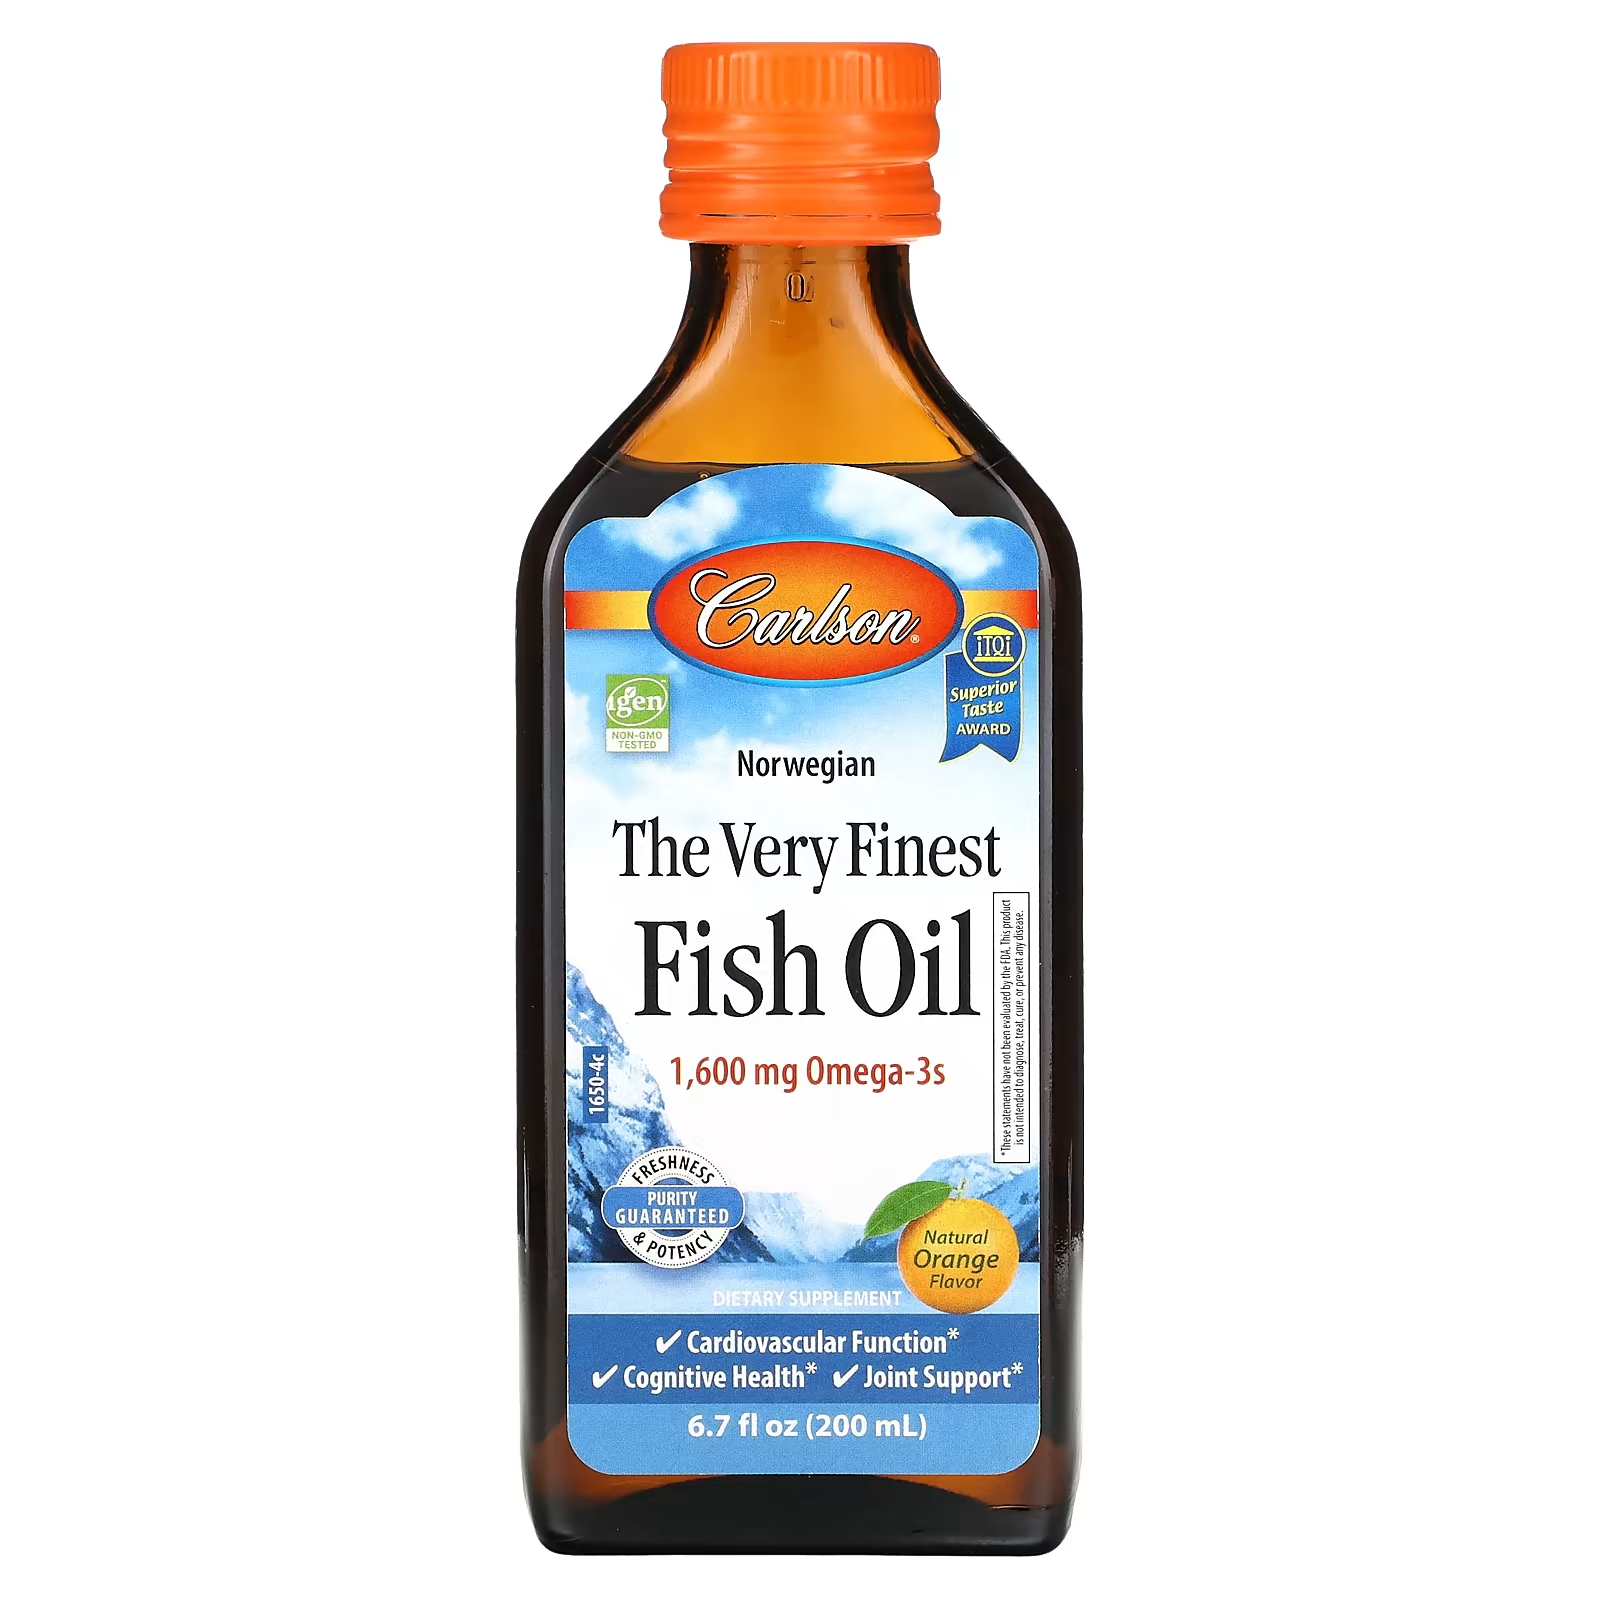 Пищевая добавка Carlson The Very Finest Fish Oil Natural Orange, 200 мл carlson kids norwegian the very finest fish oil just peachie 800 mg 6 7 fl oz 200 ml